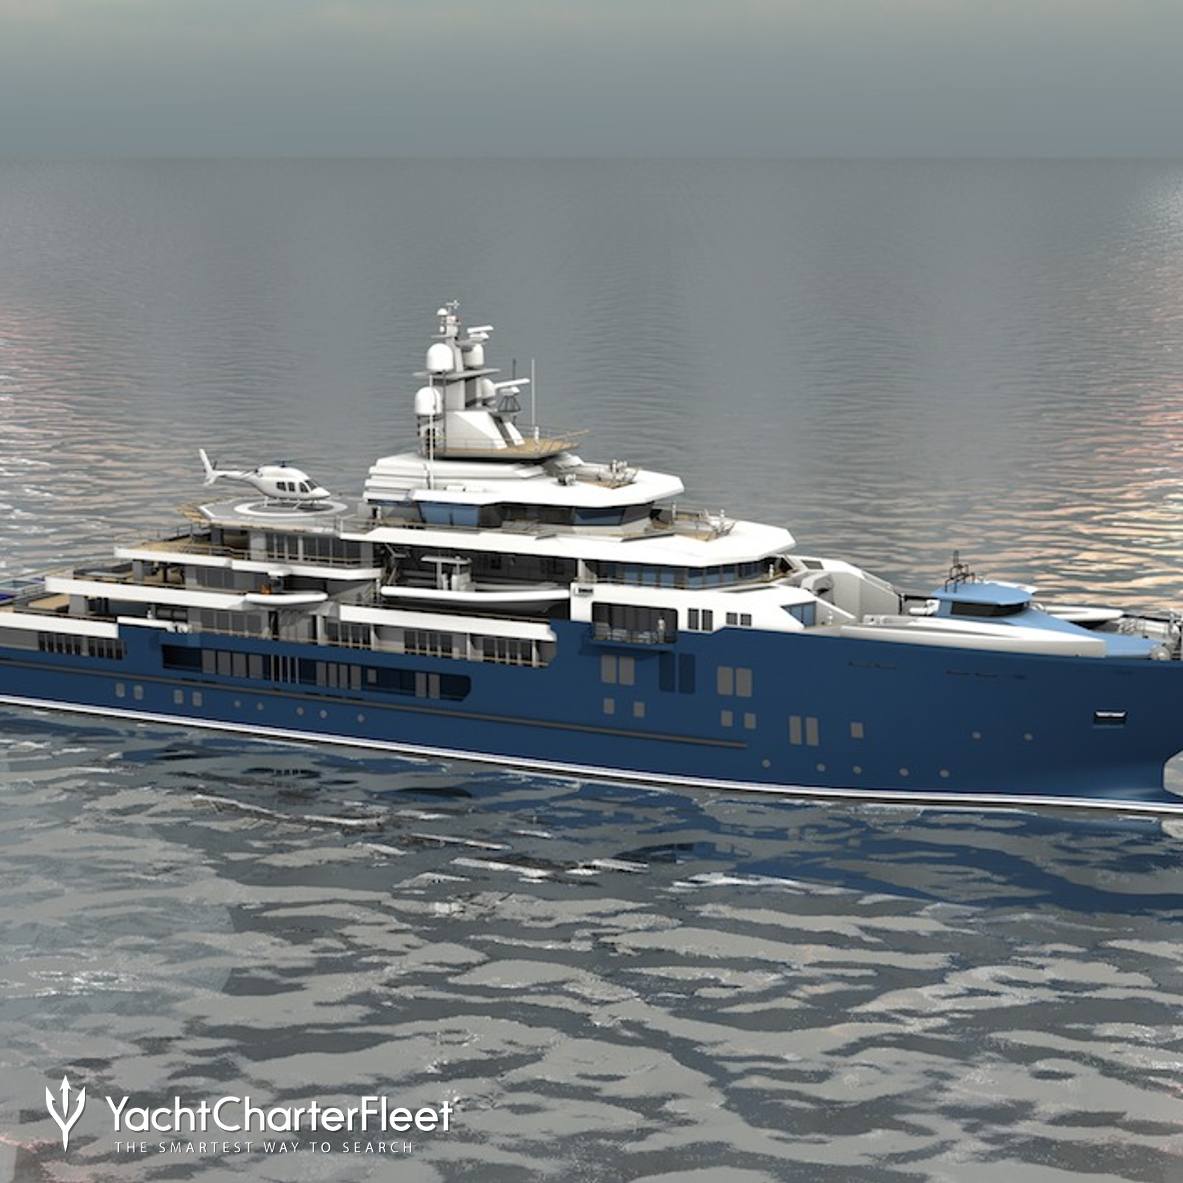 ulysses yacht photos - kleven yacht charter fleet